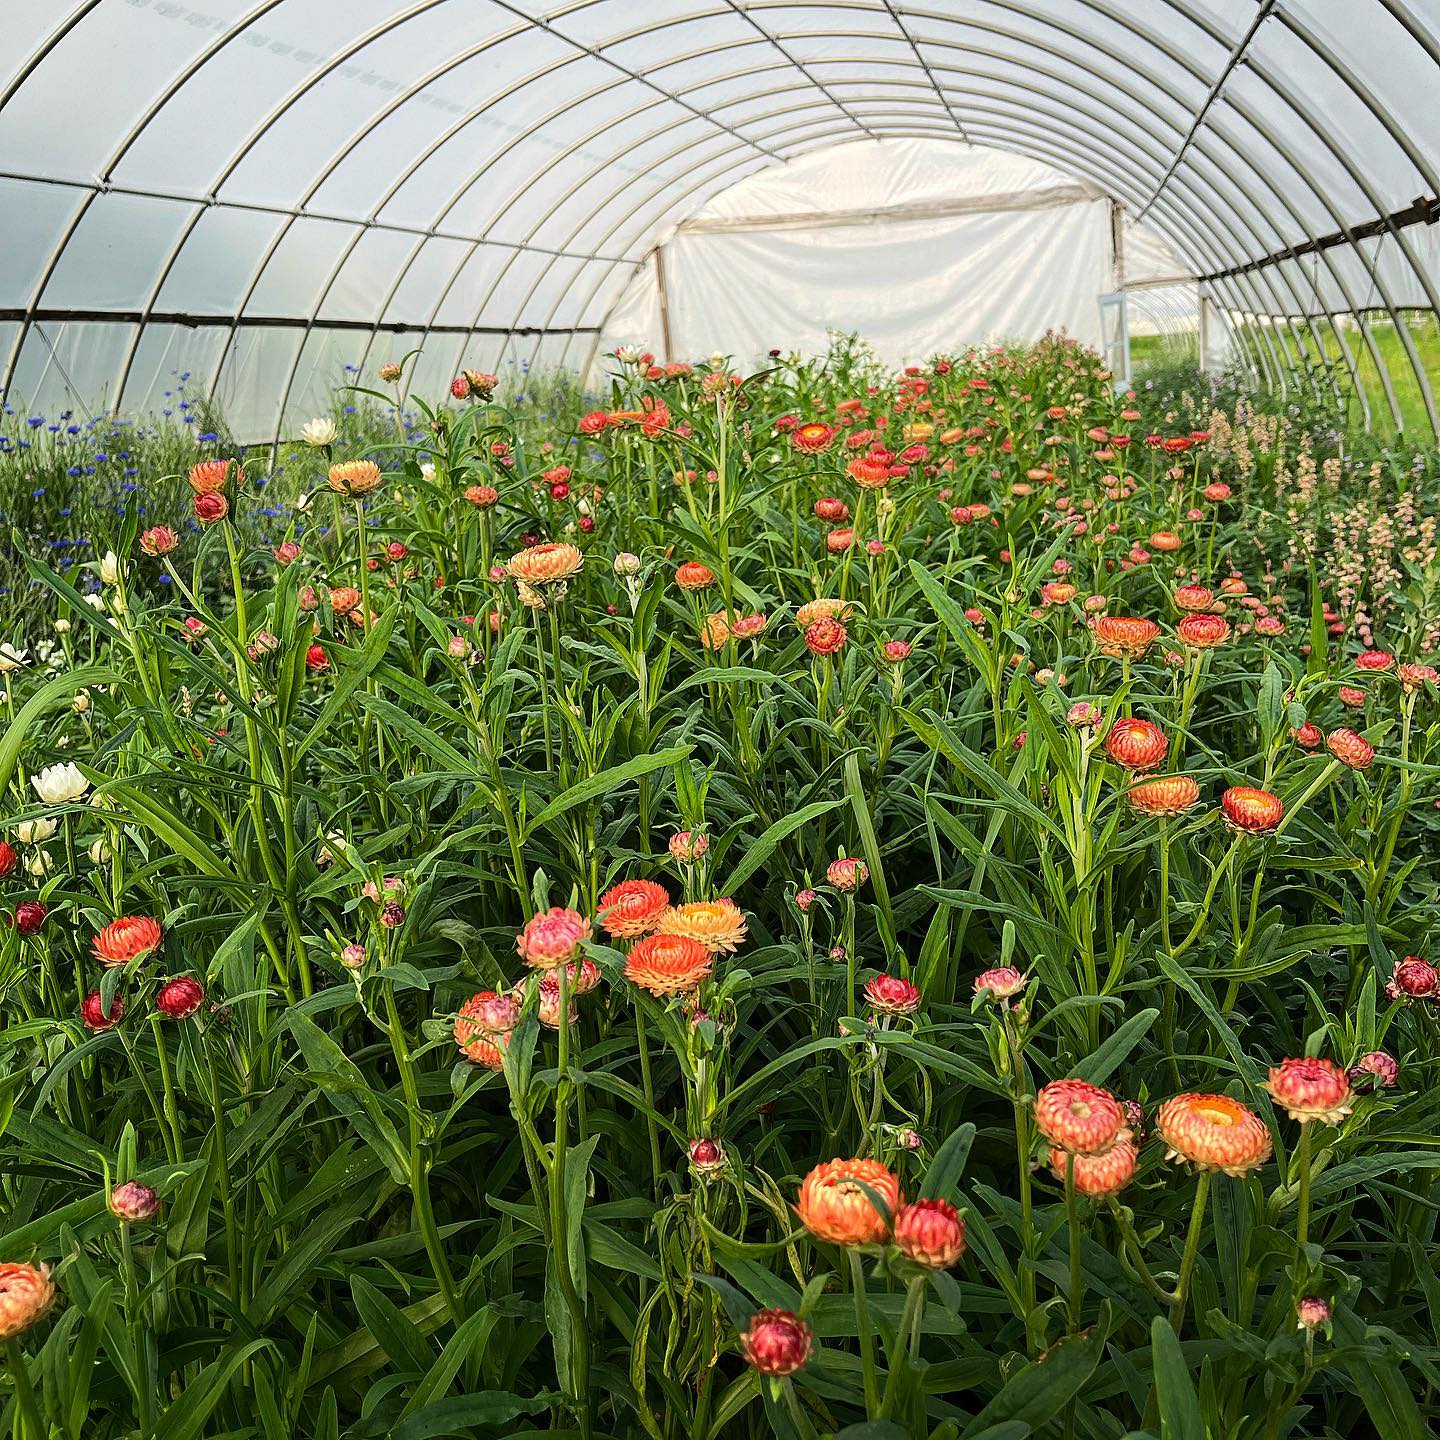 Flower Farm Photography Venue Rental